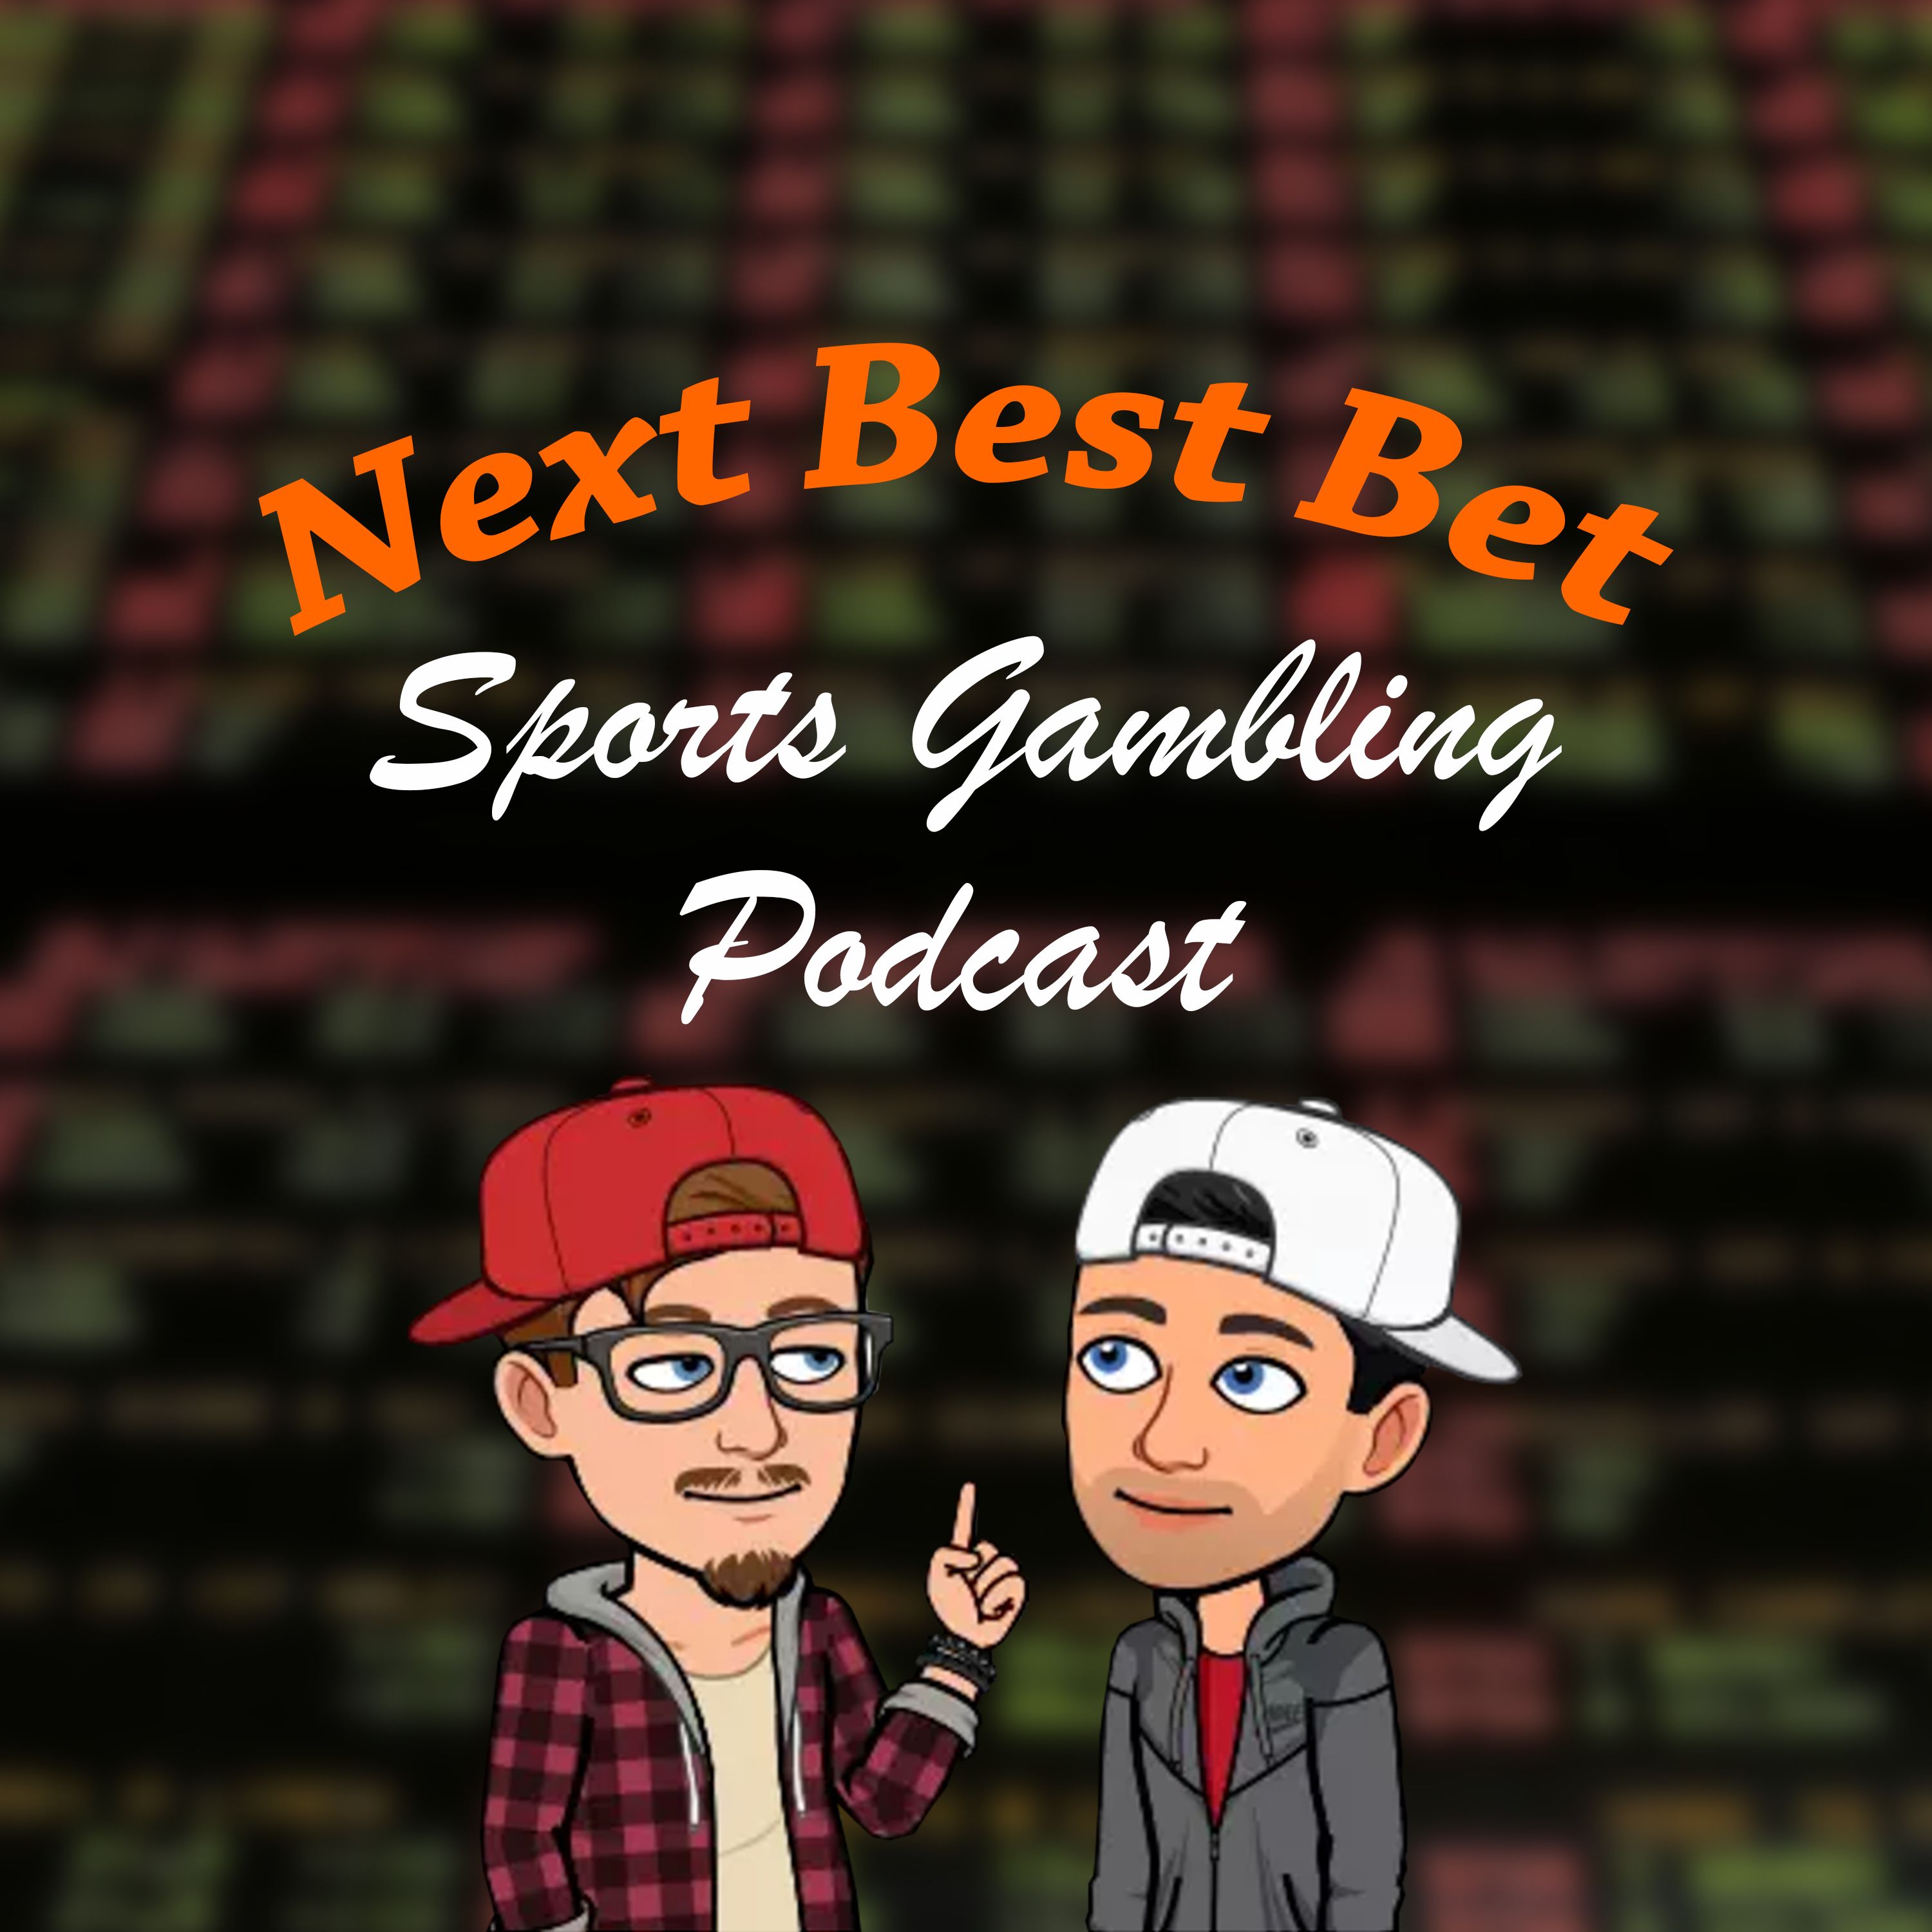 Stream Best Bet | Listen podcast episodes online for free on SoundCloud